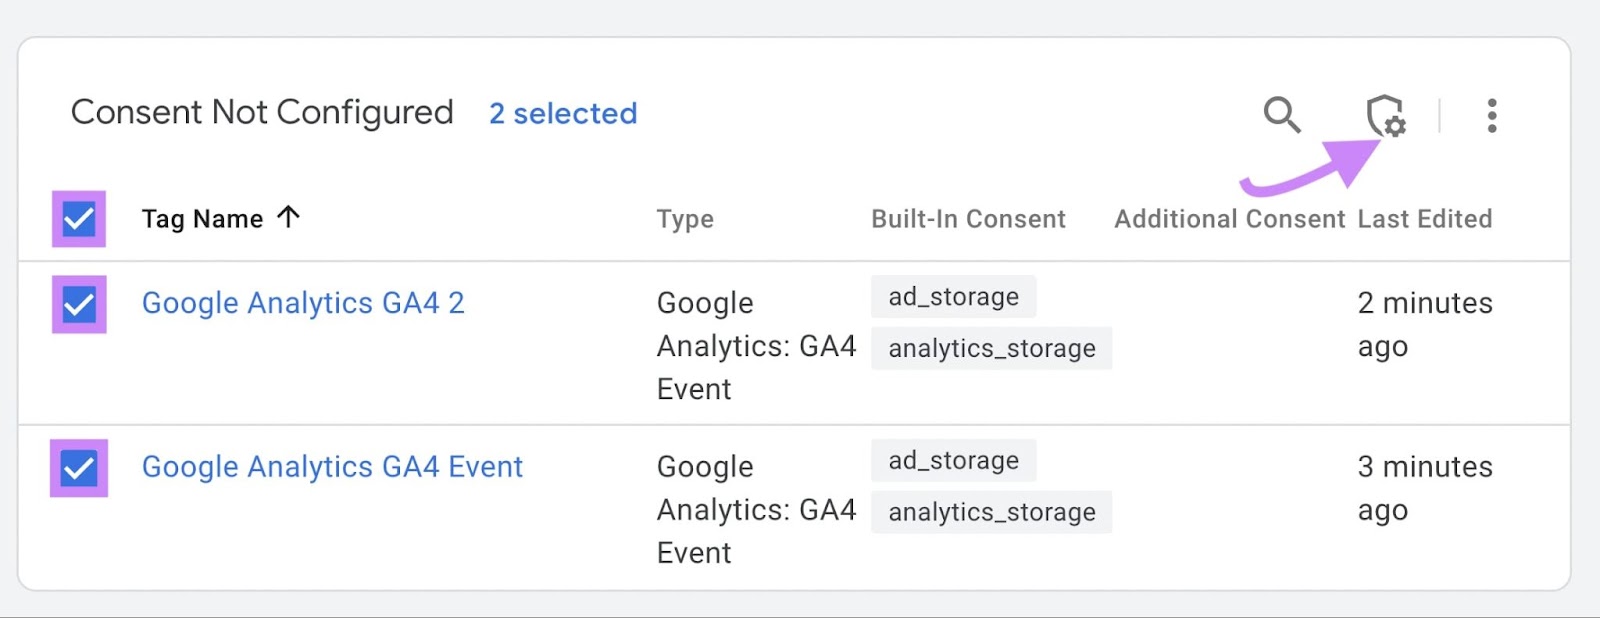 "Google Analytics GA4 2," and "Google Analytics GA4 Event" tags selected